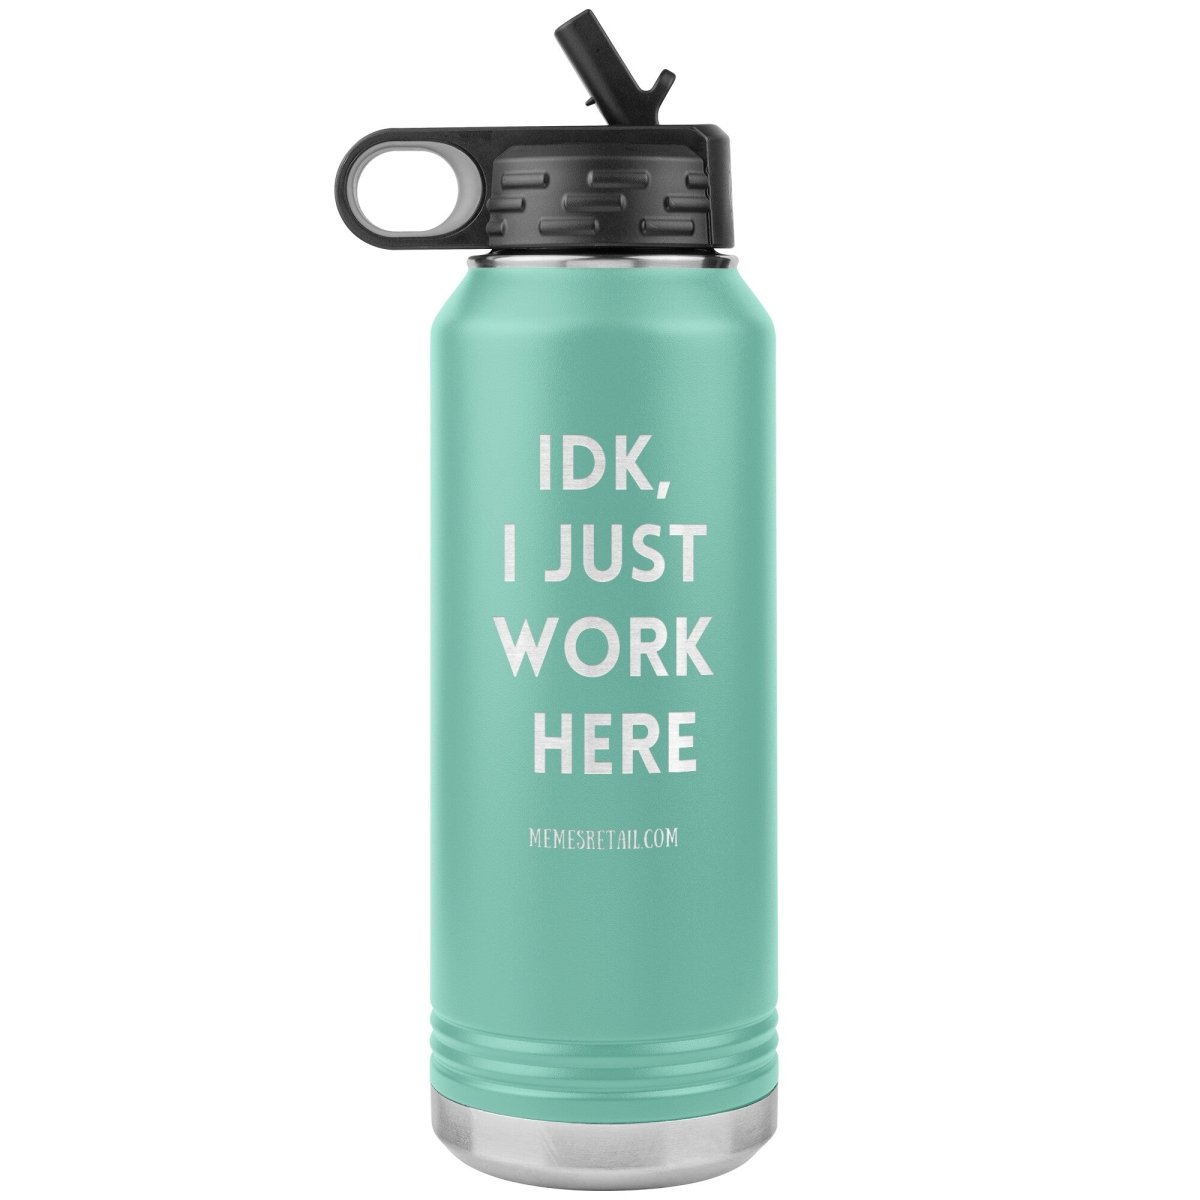 IDK, I Just Work Here 32 oz Stainless Steel Water Bottle Tumbler, Teal - MemesRetail.com